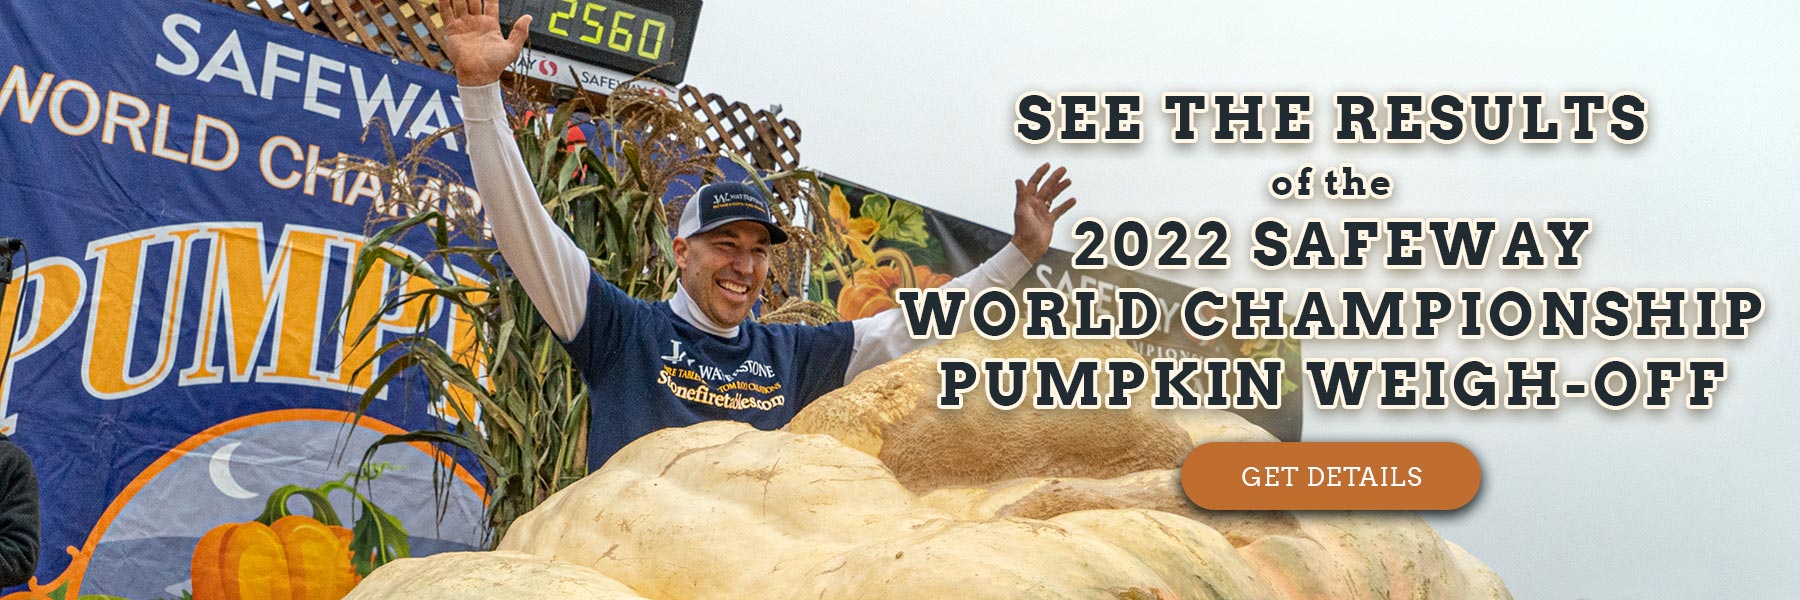 2022 Safeway World Championship Pumpkin Weigh-Off Results - click for details